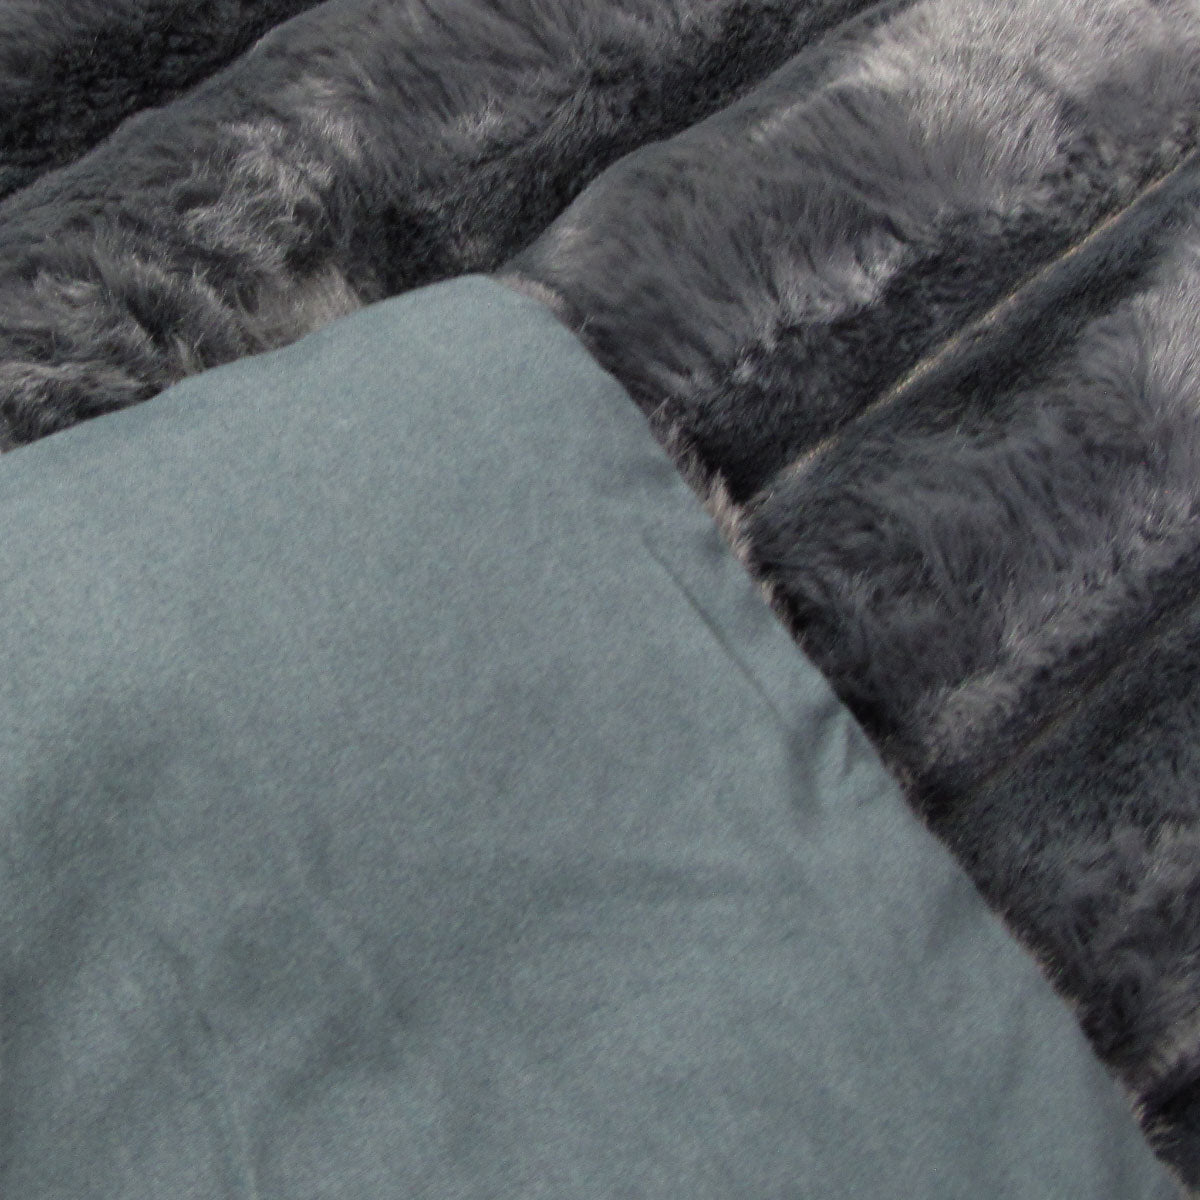 Queen Jane Barrington Arna Charcoal 3 Pcs Channel Faux Bunny Fur Comforter Set